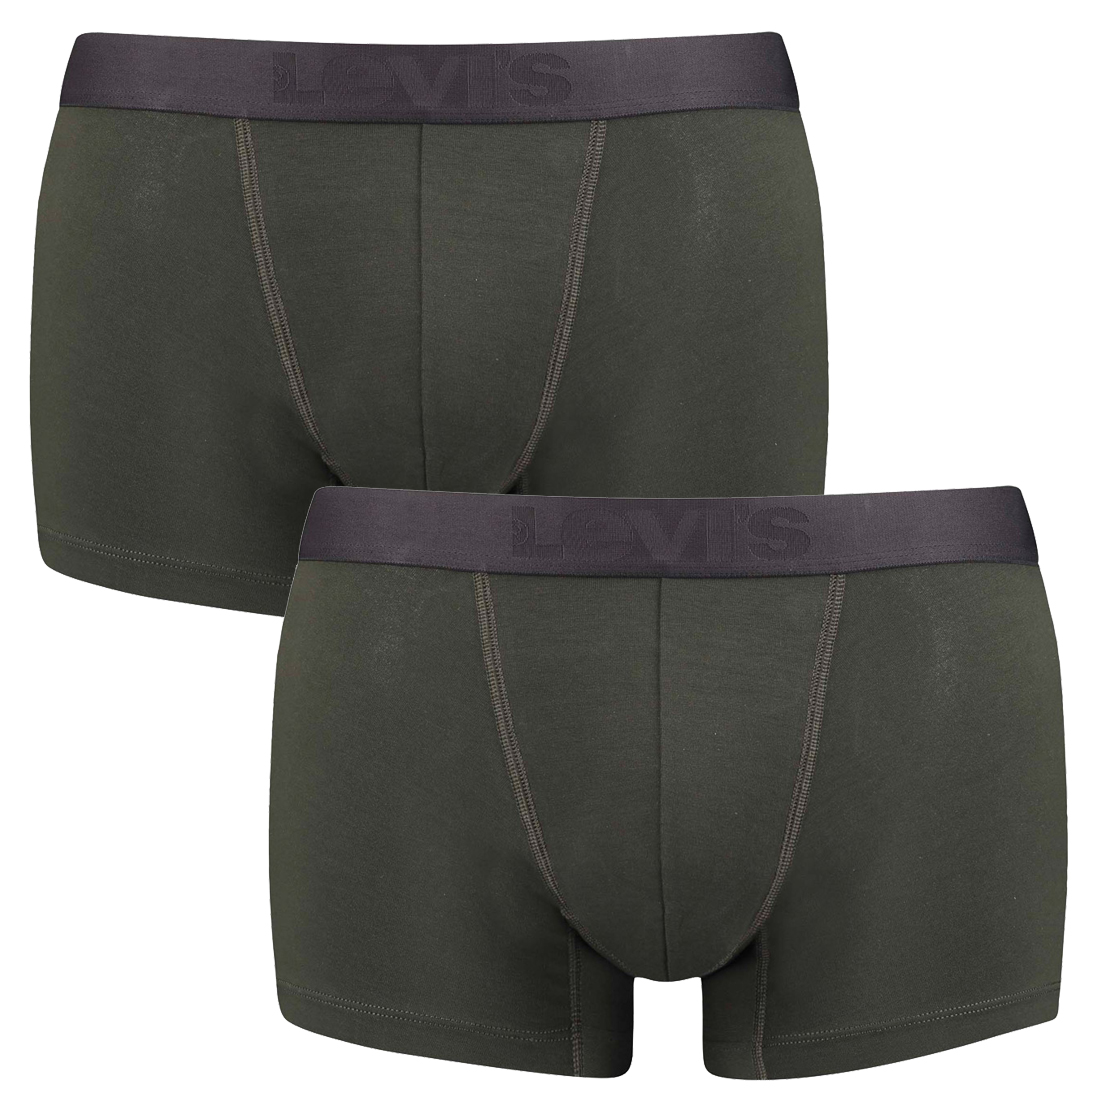 2er Pack Levis Herren Movement Tencel Trunk Boxer Shorts Unterhose Pant Unterwäsche S, Army Green